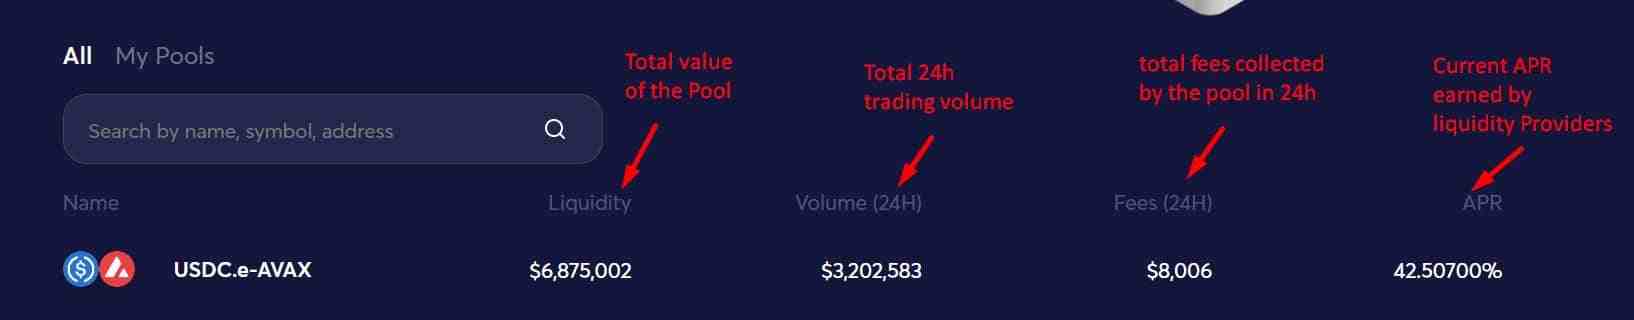 trading pool info